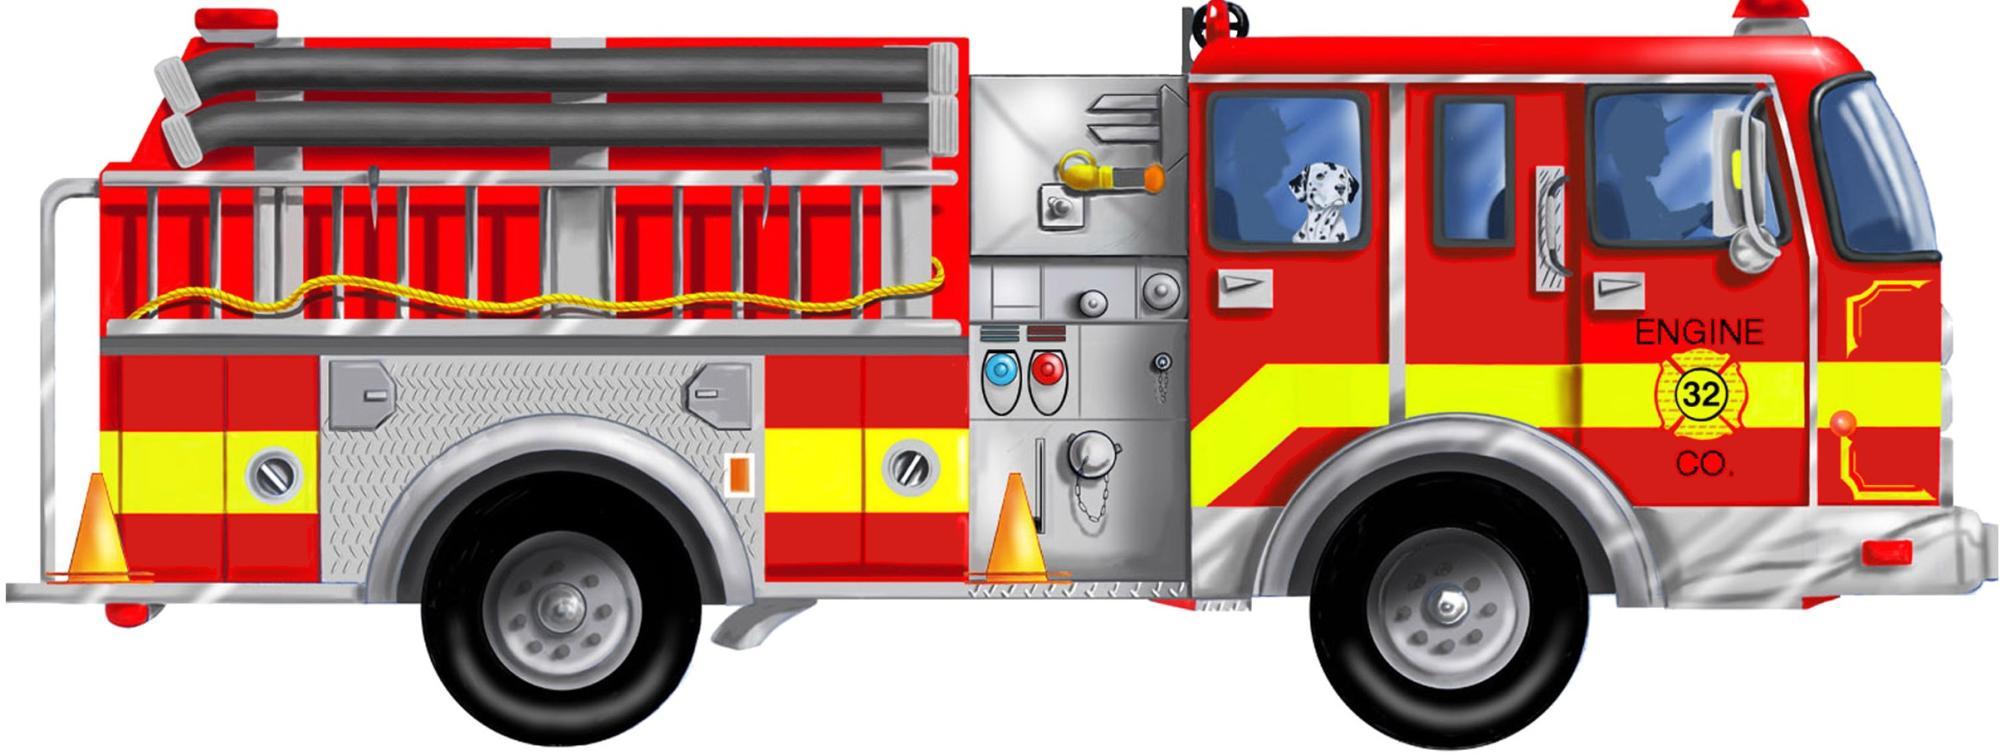 Free Cartoon Firetrucks Cliparts, Download Free Cartoon ...